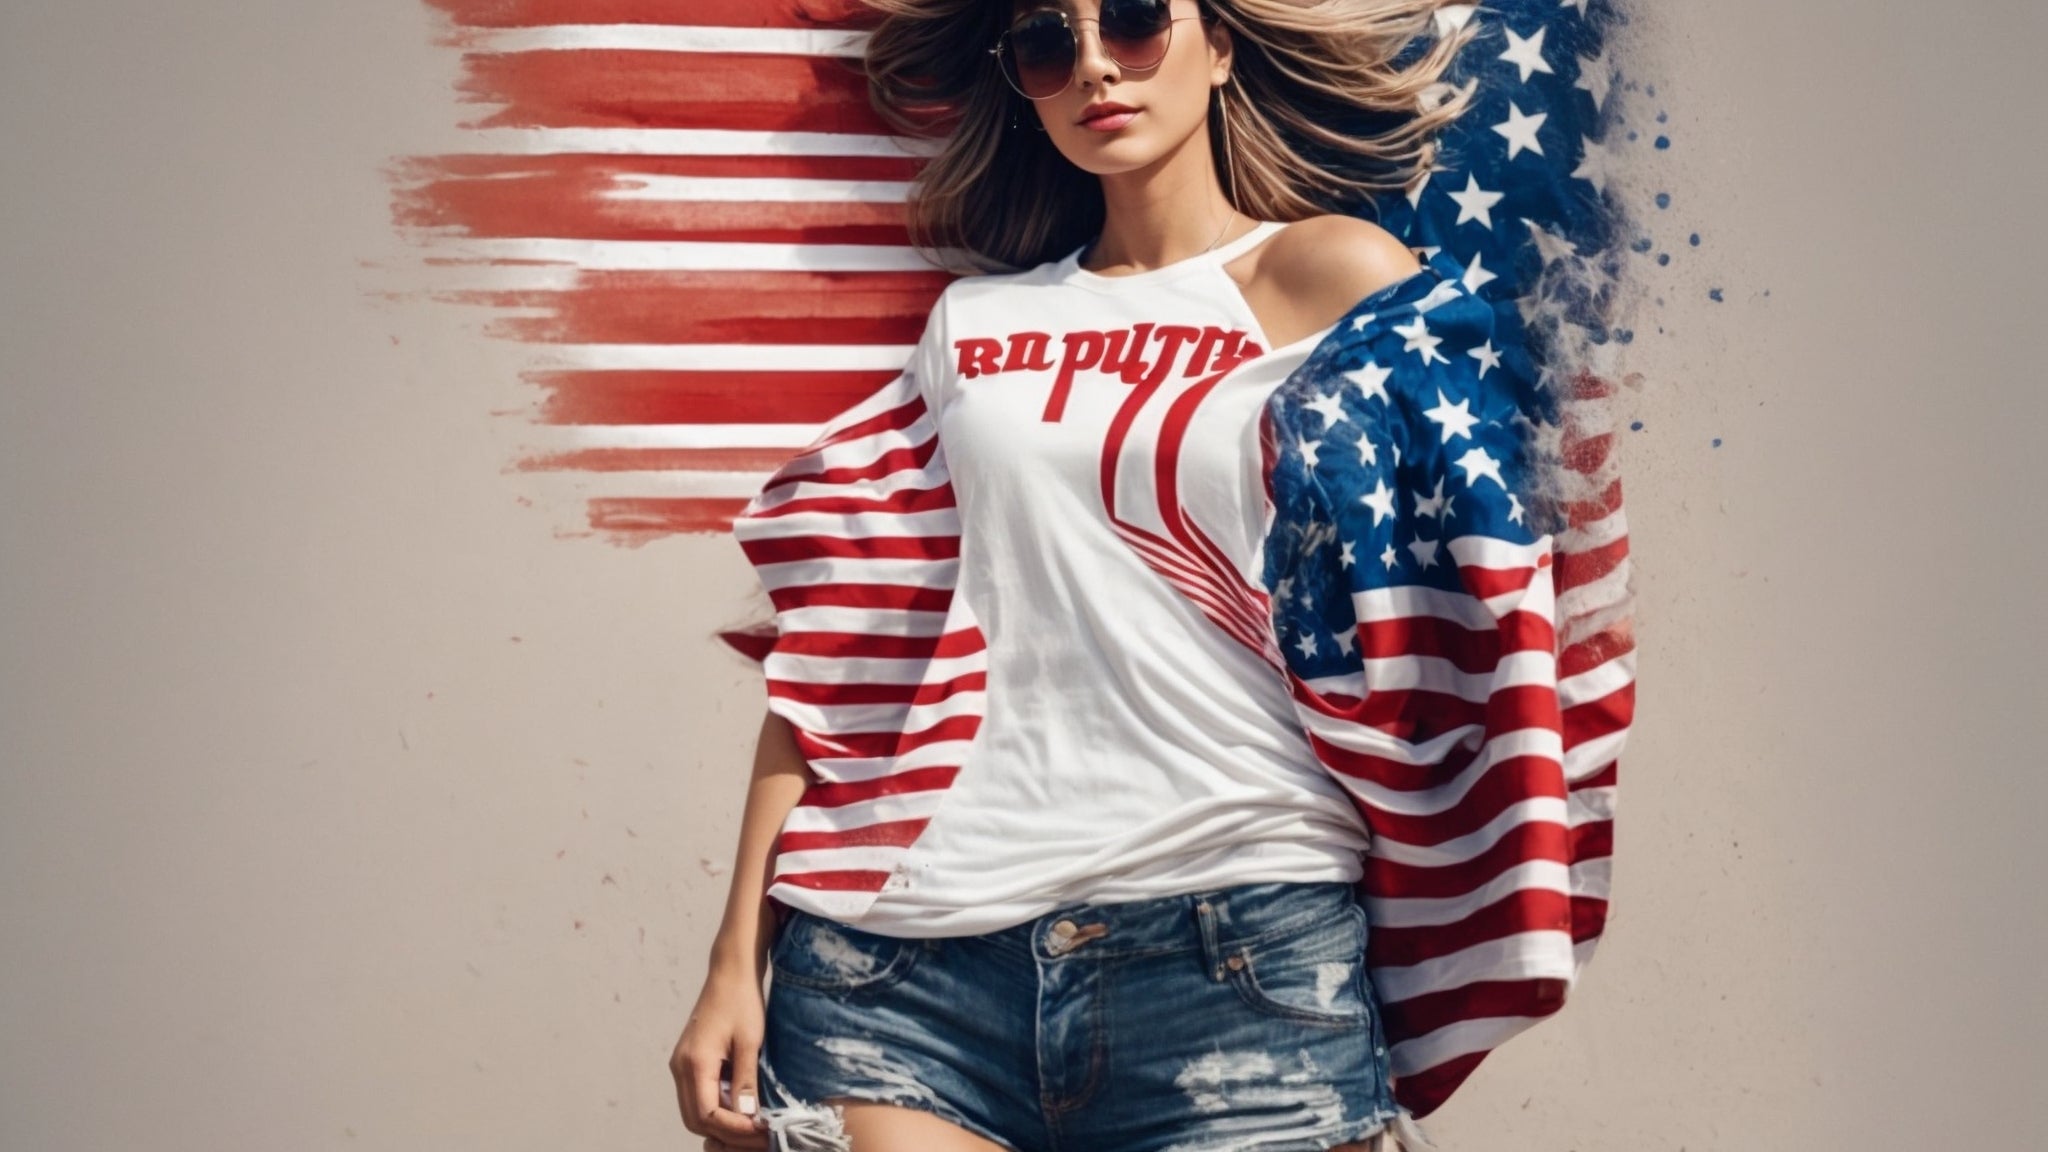 Uttrykk din republikanske patriotisme med stilige T-skjorter for Trump-supportere